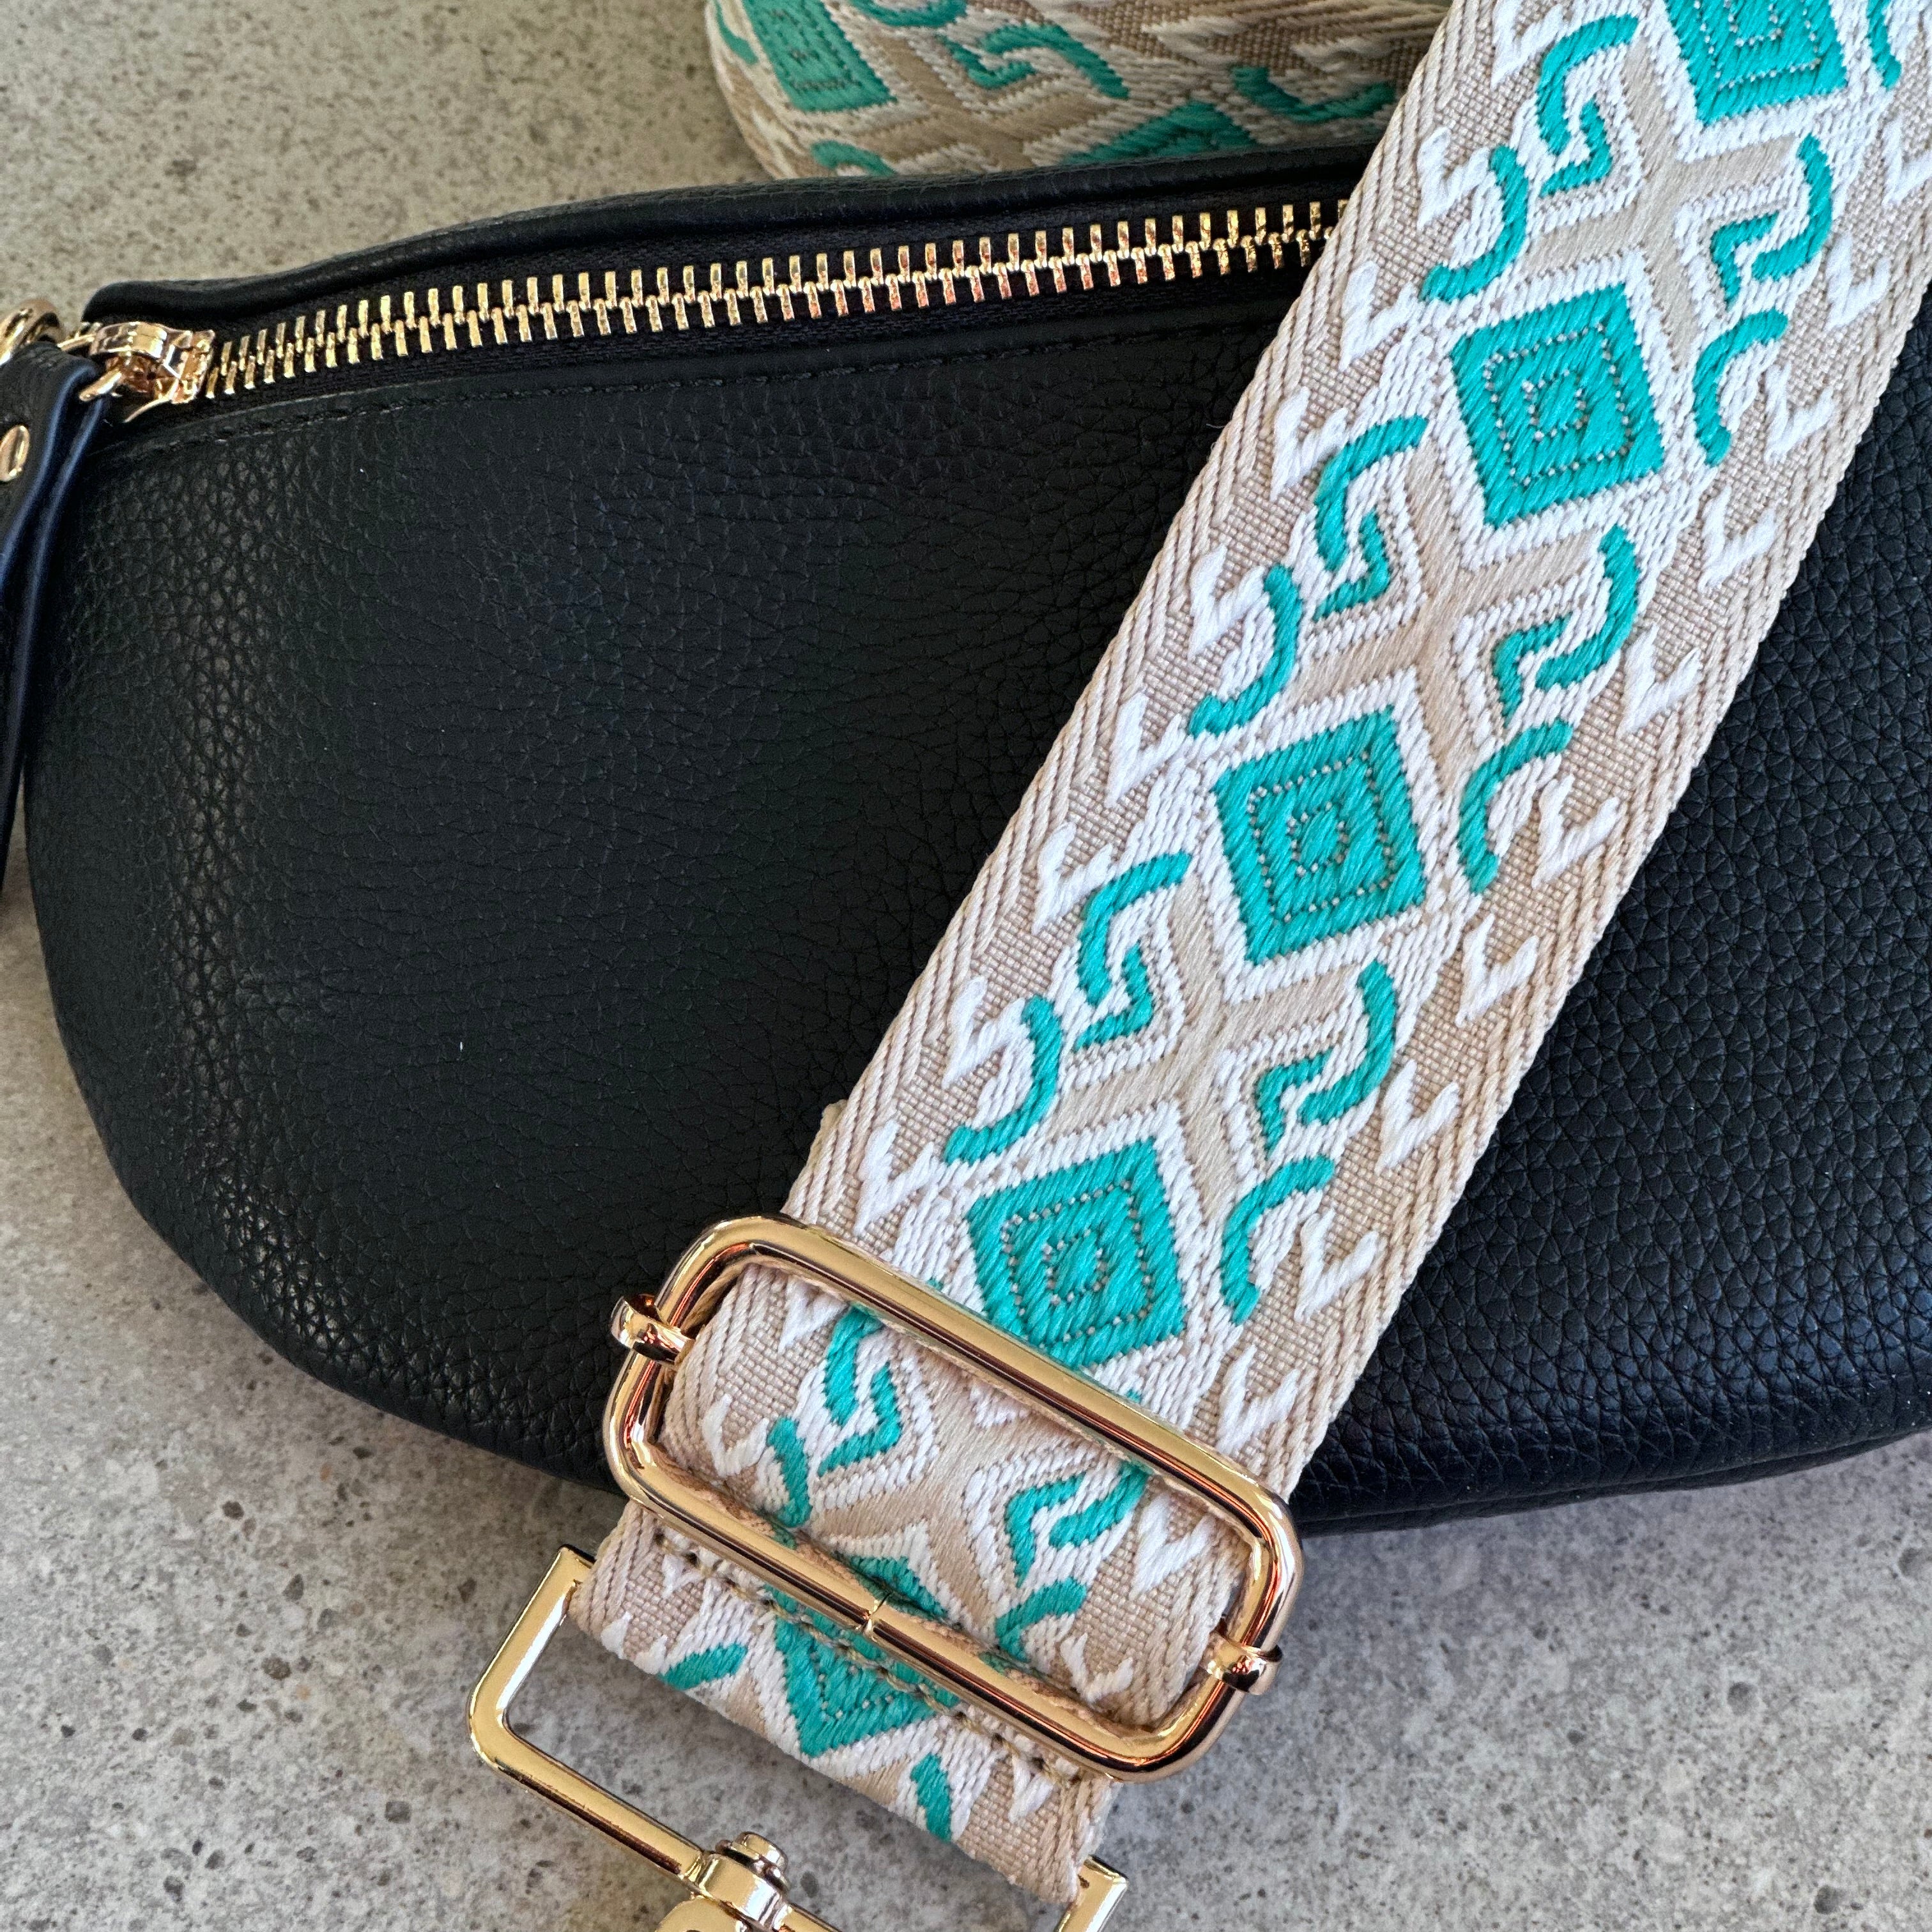 Turquoise bag strap